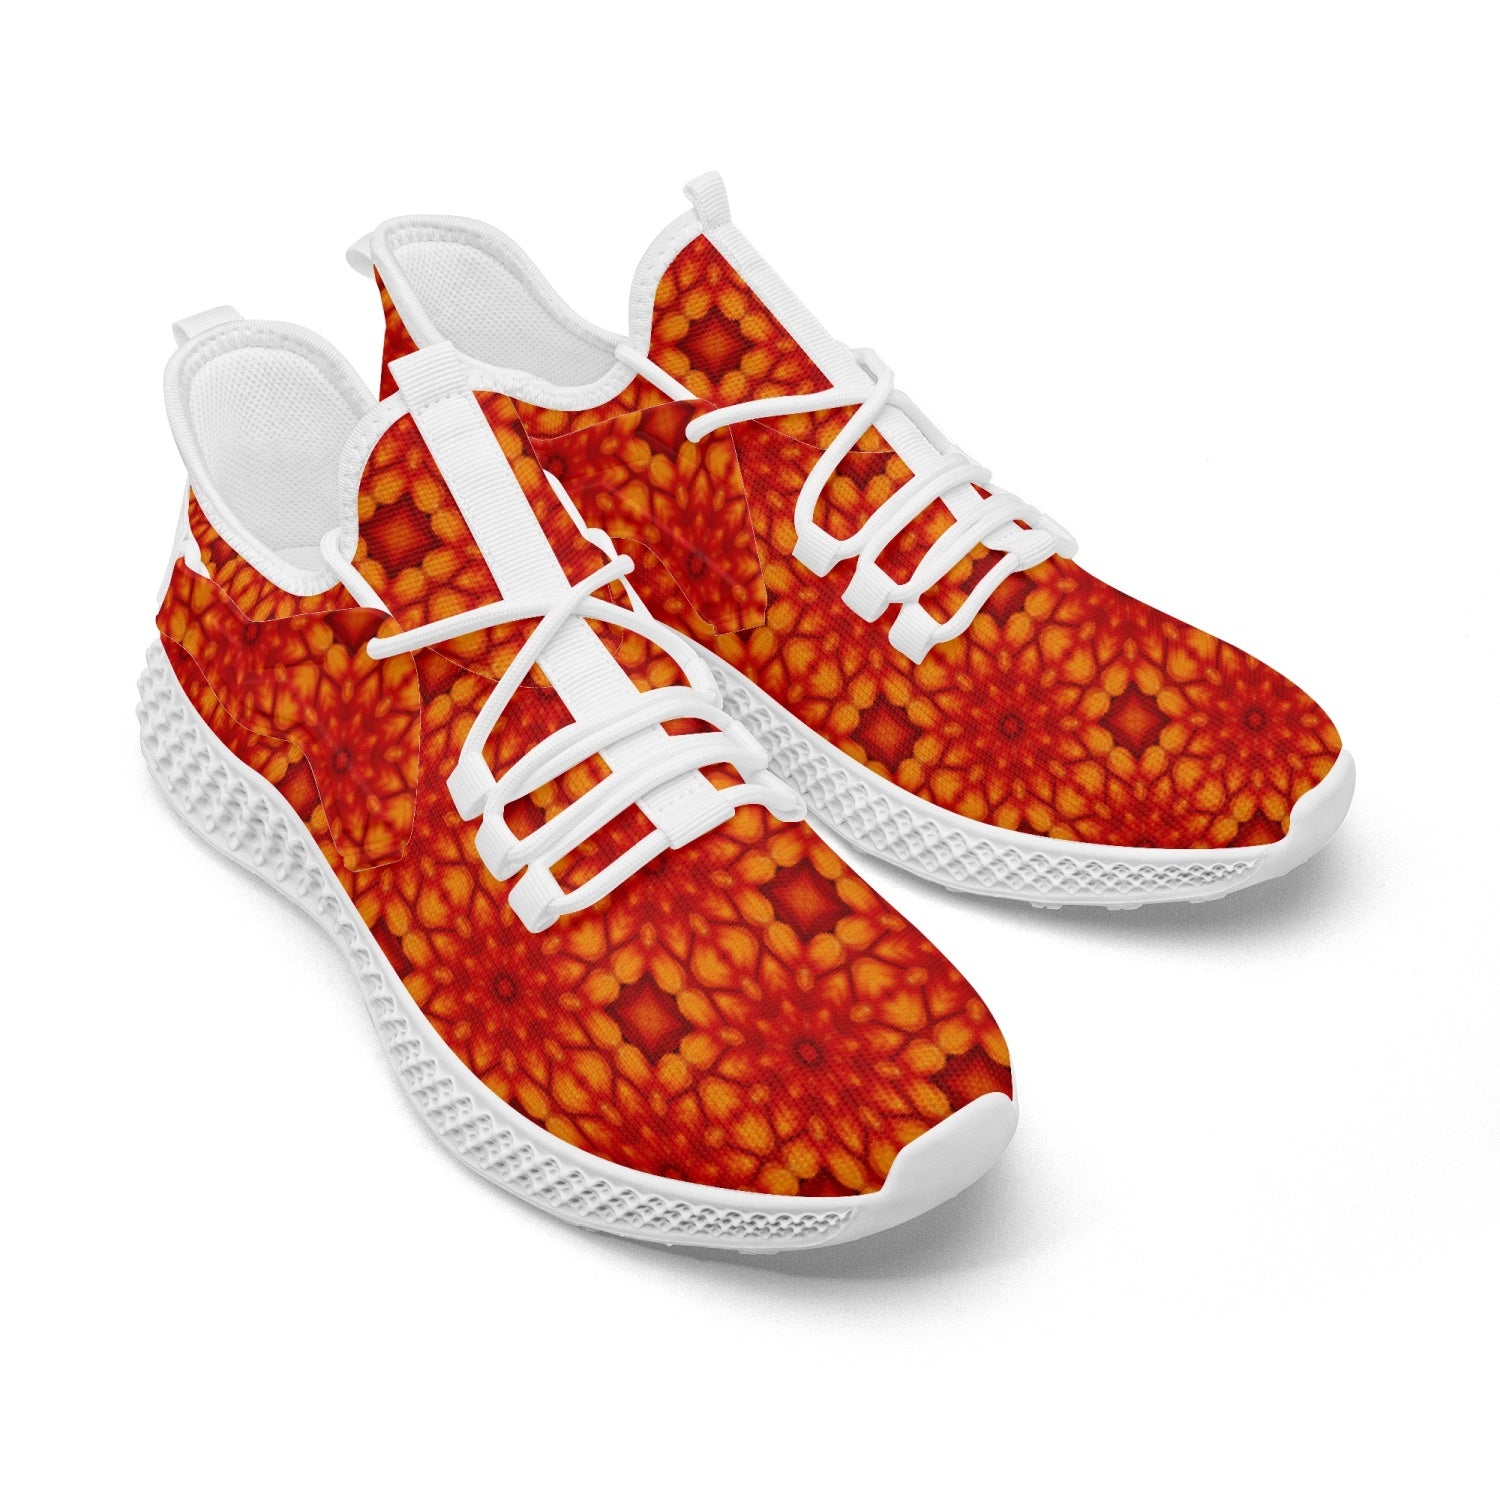 Orange Sacral Chacra, Net Style Mesh Knit Sneakers, by Sensus Studio Design